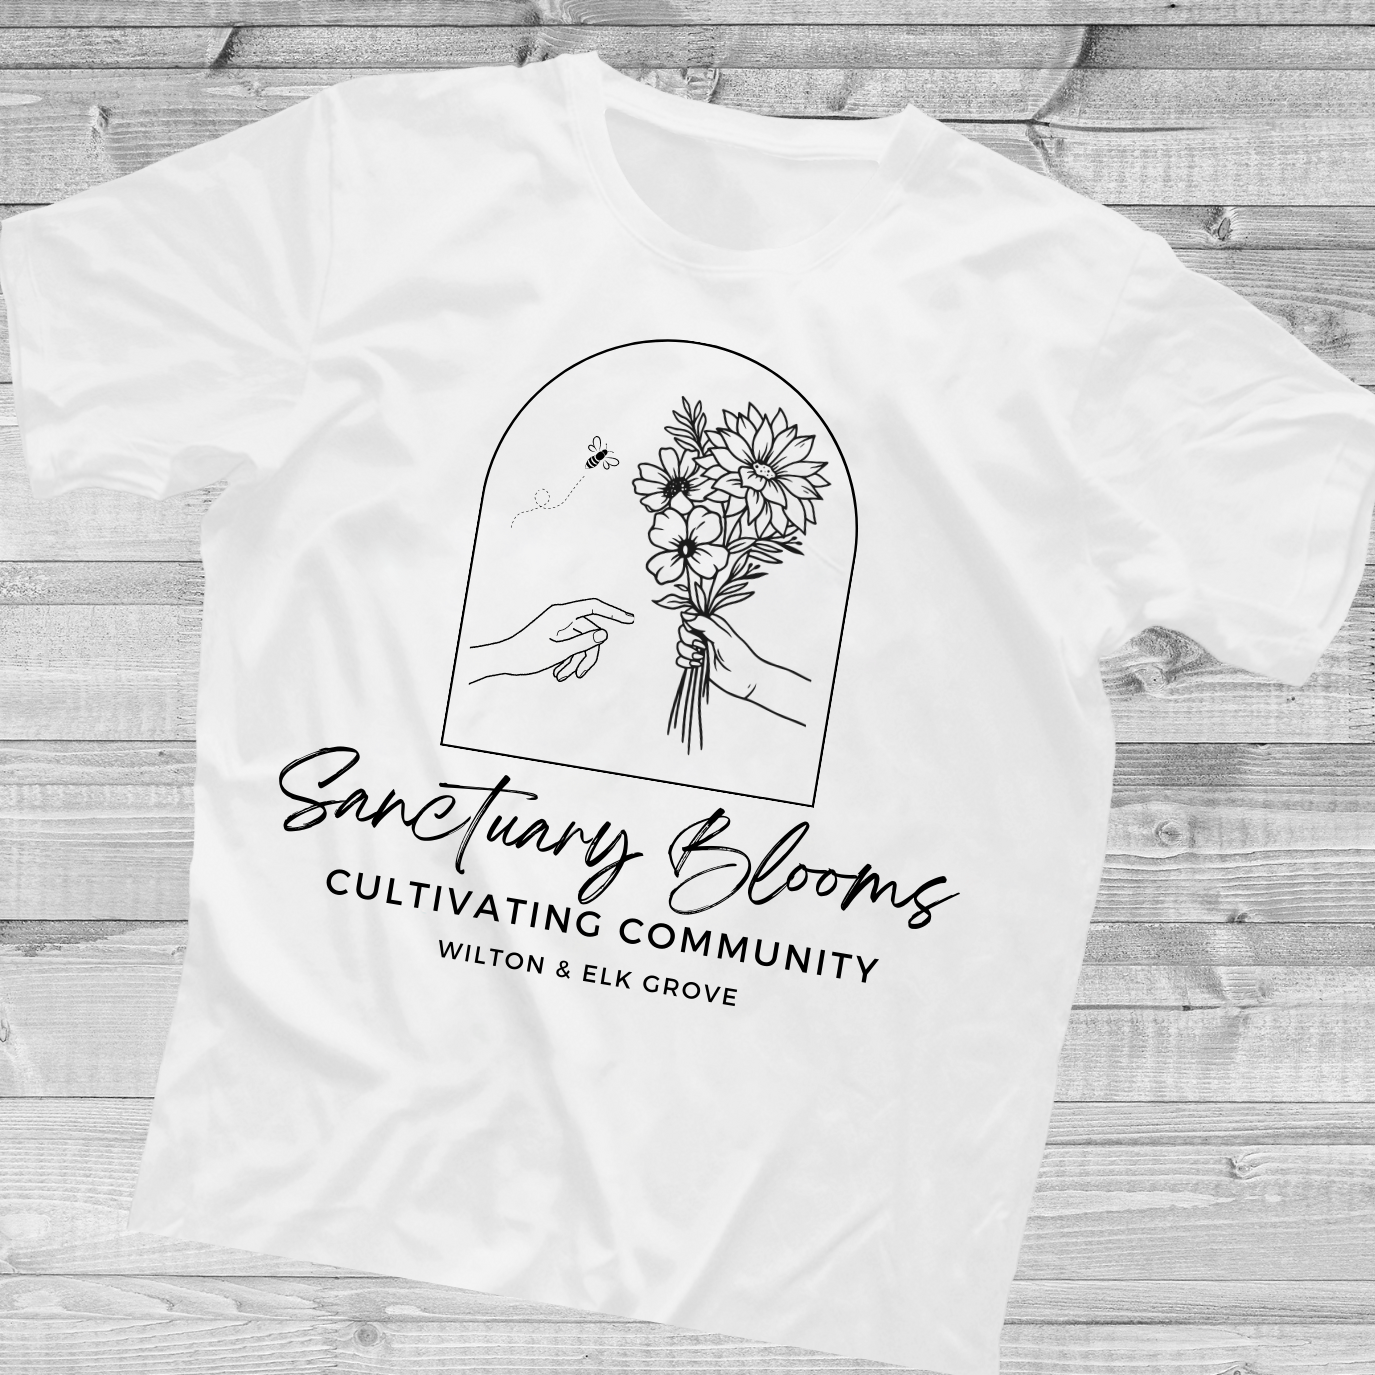 Sanctuary Blooms T-Shirt - Cultivating Community (3 Color Options)